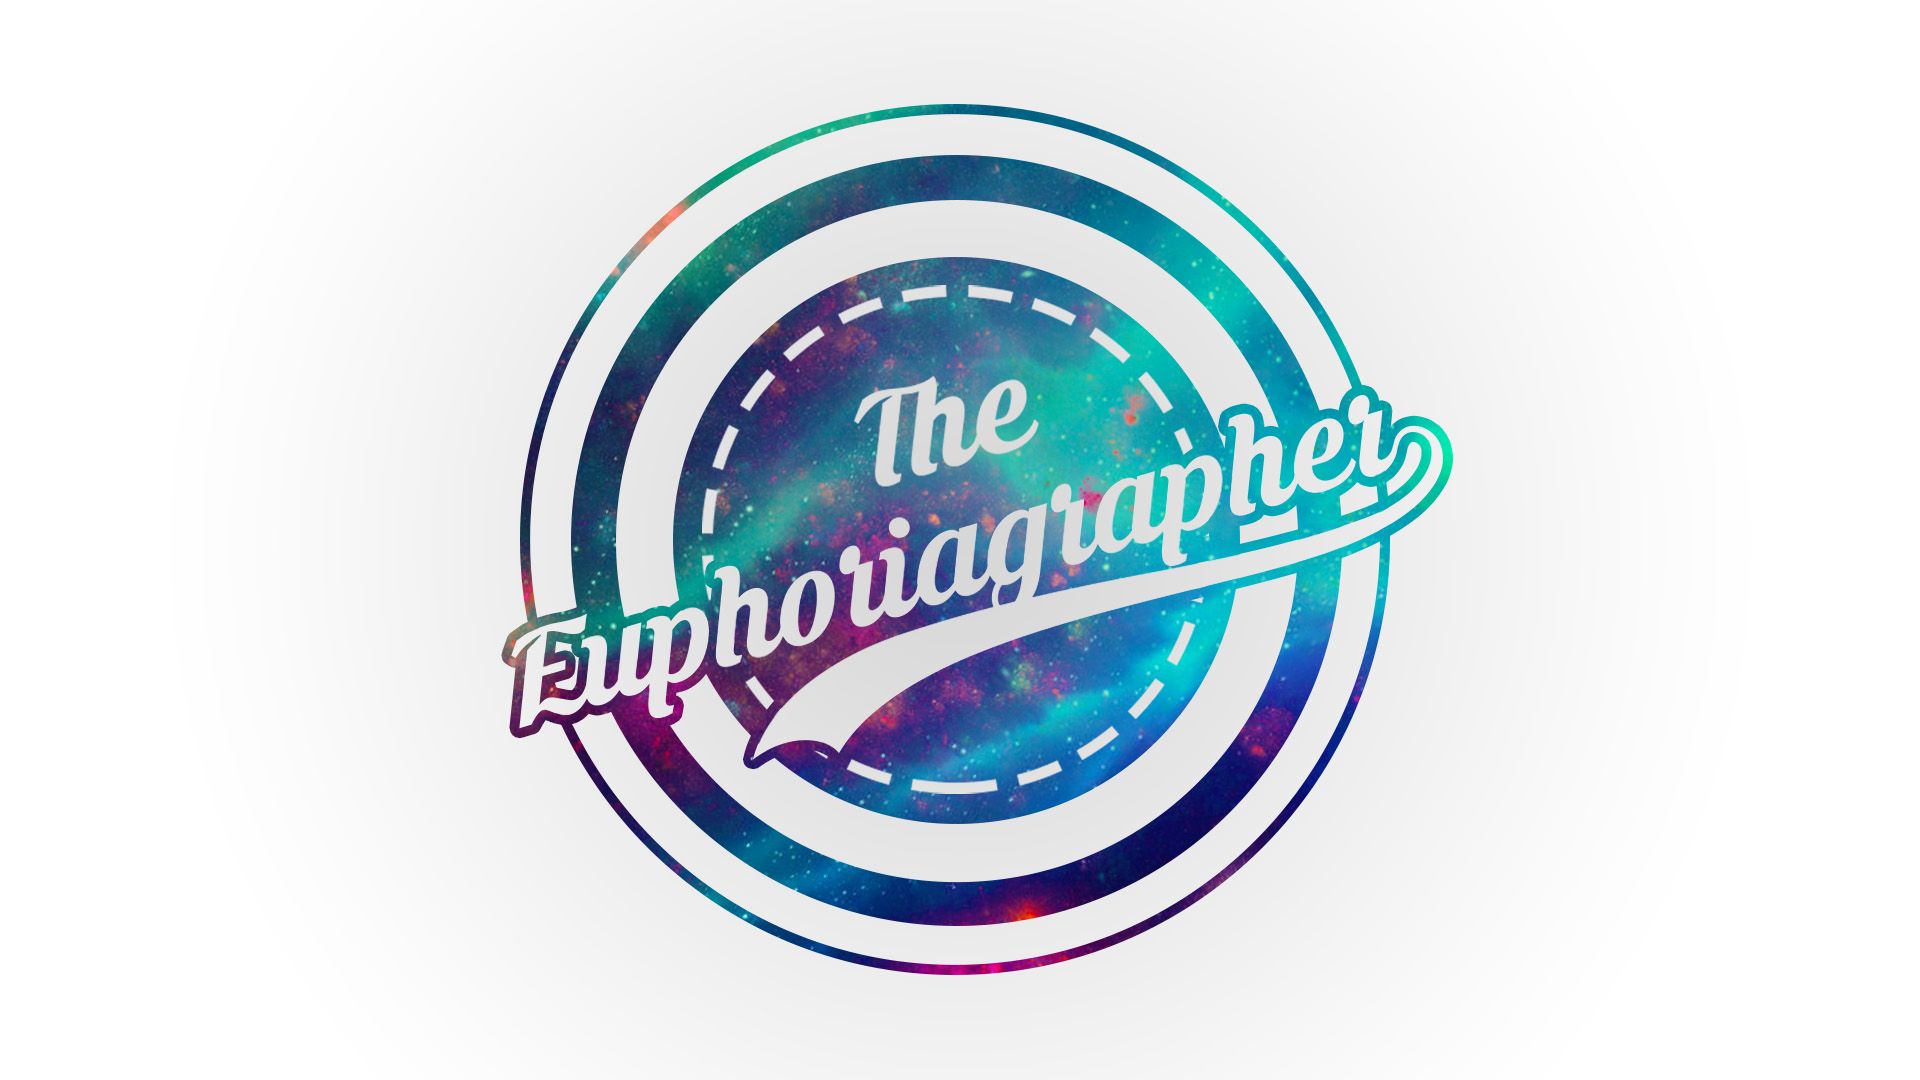 The Euphoriagrapher LOGO.jpg